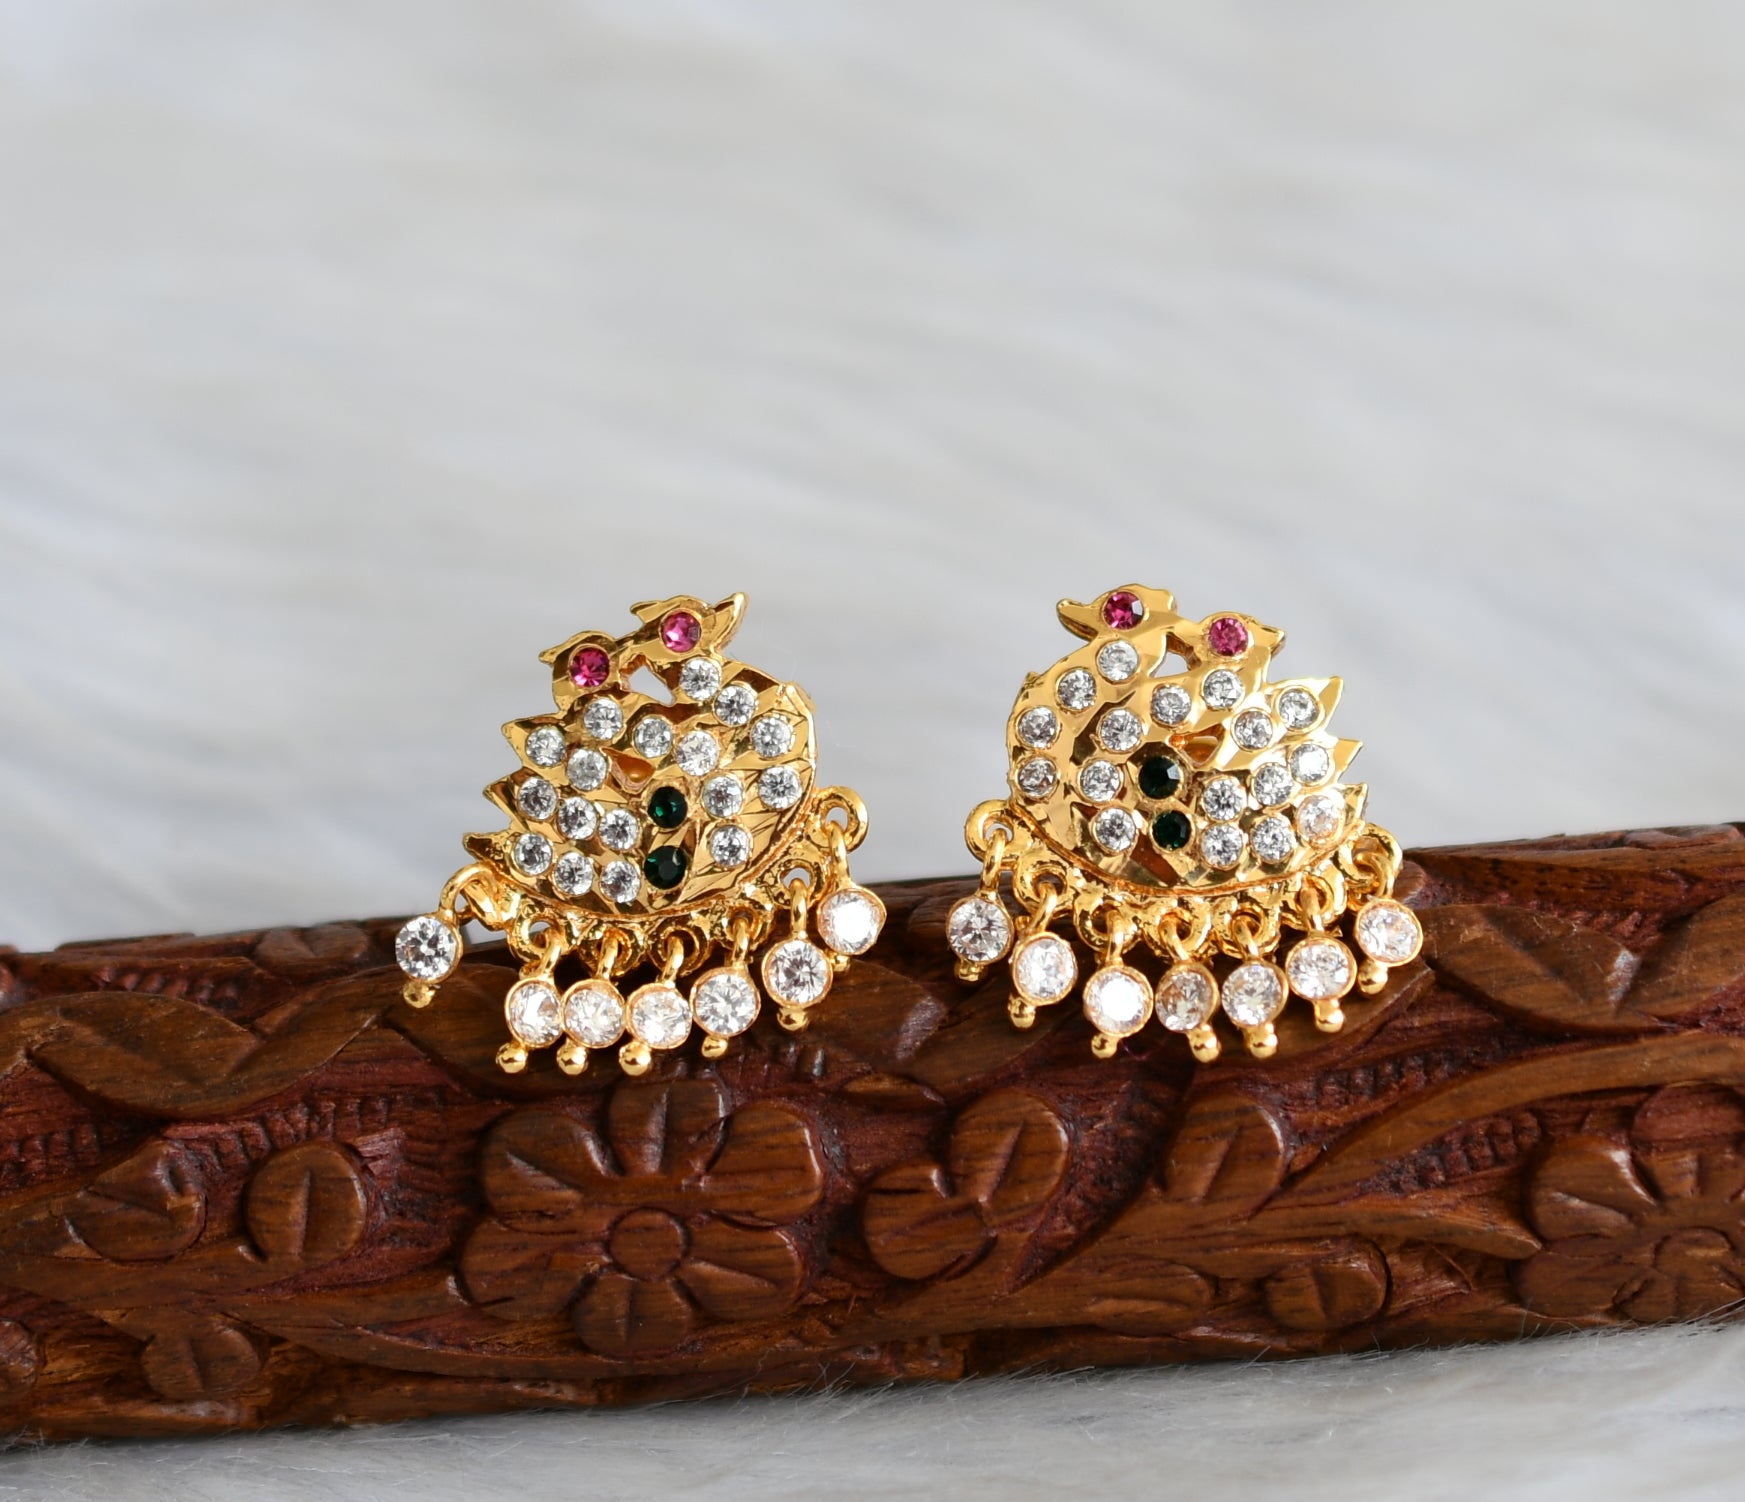 Buy white stone earrings in India @ Limeroad